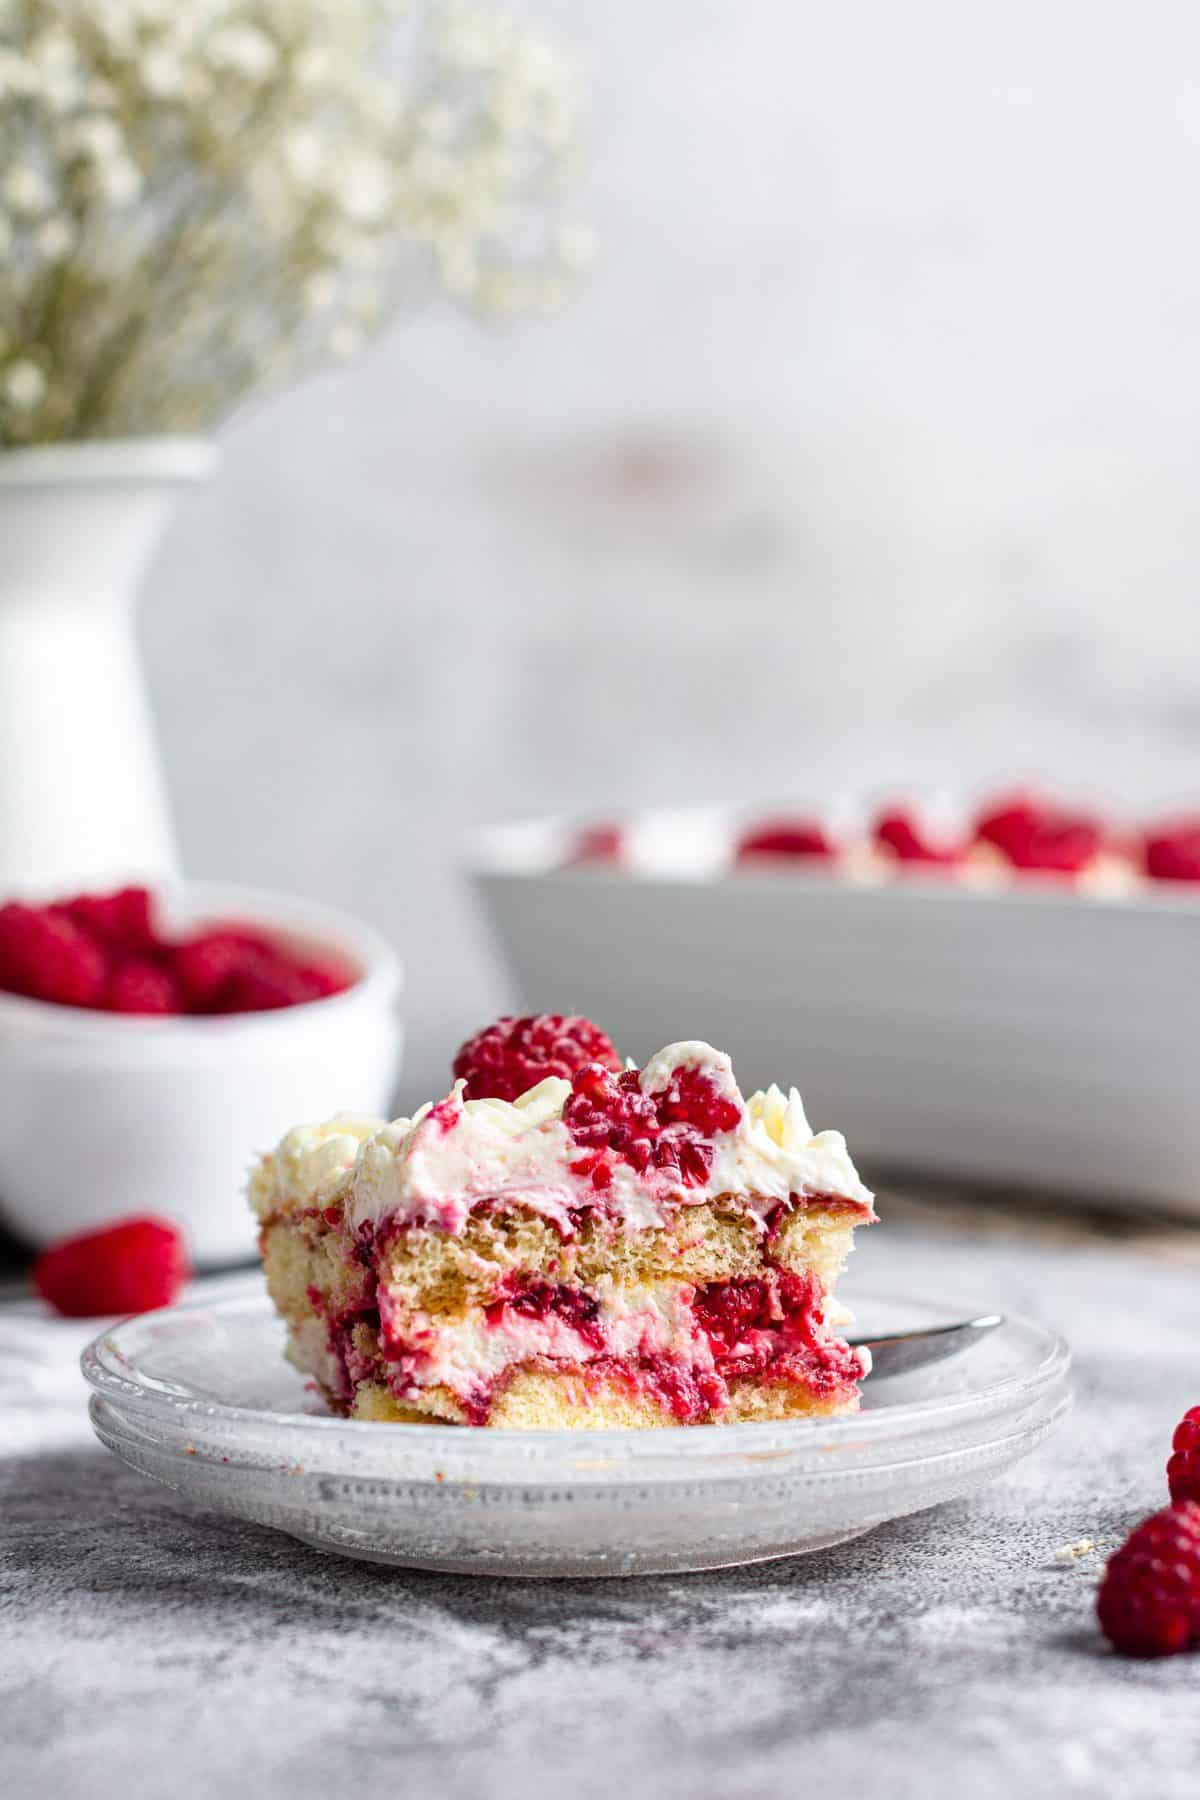 slice of raspberry amaretto tiramisu on white plate with bowl of raspberries in the background